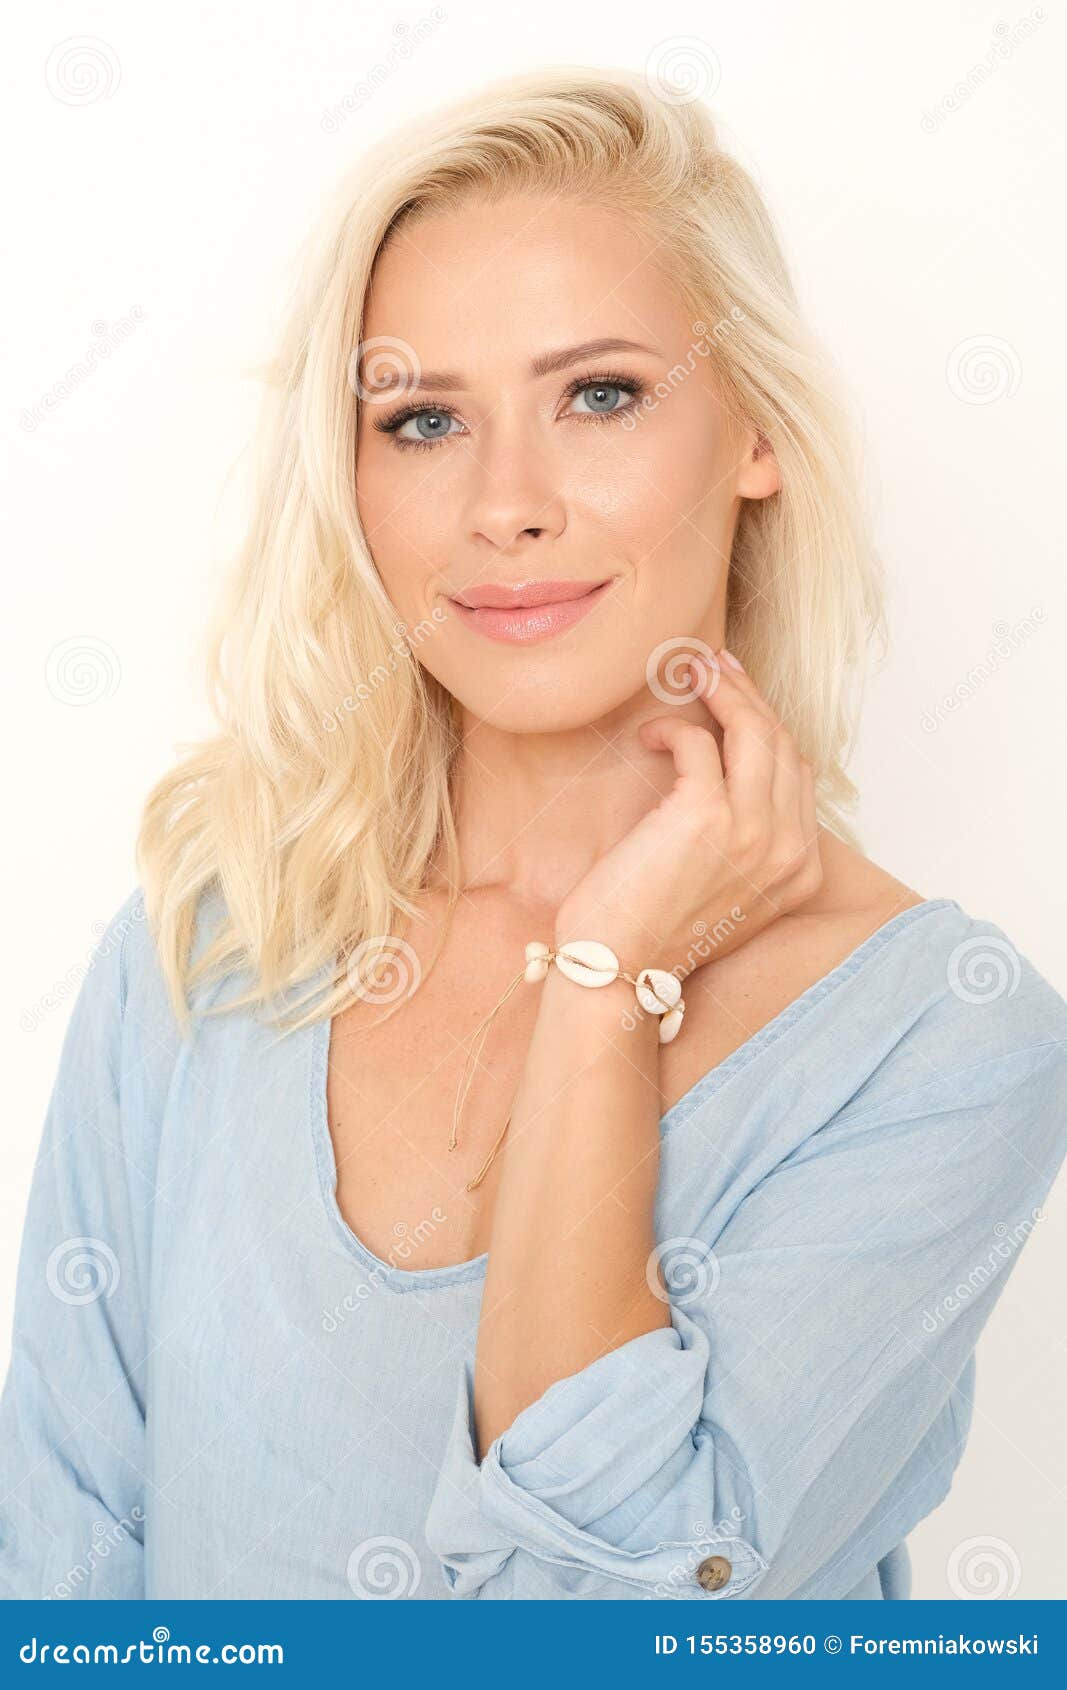 anurag raman add photo mature blonde woman